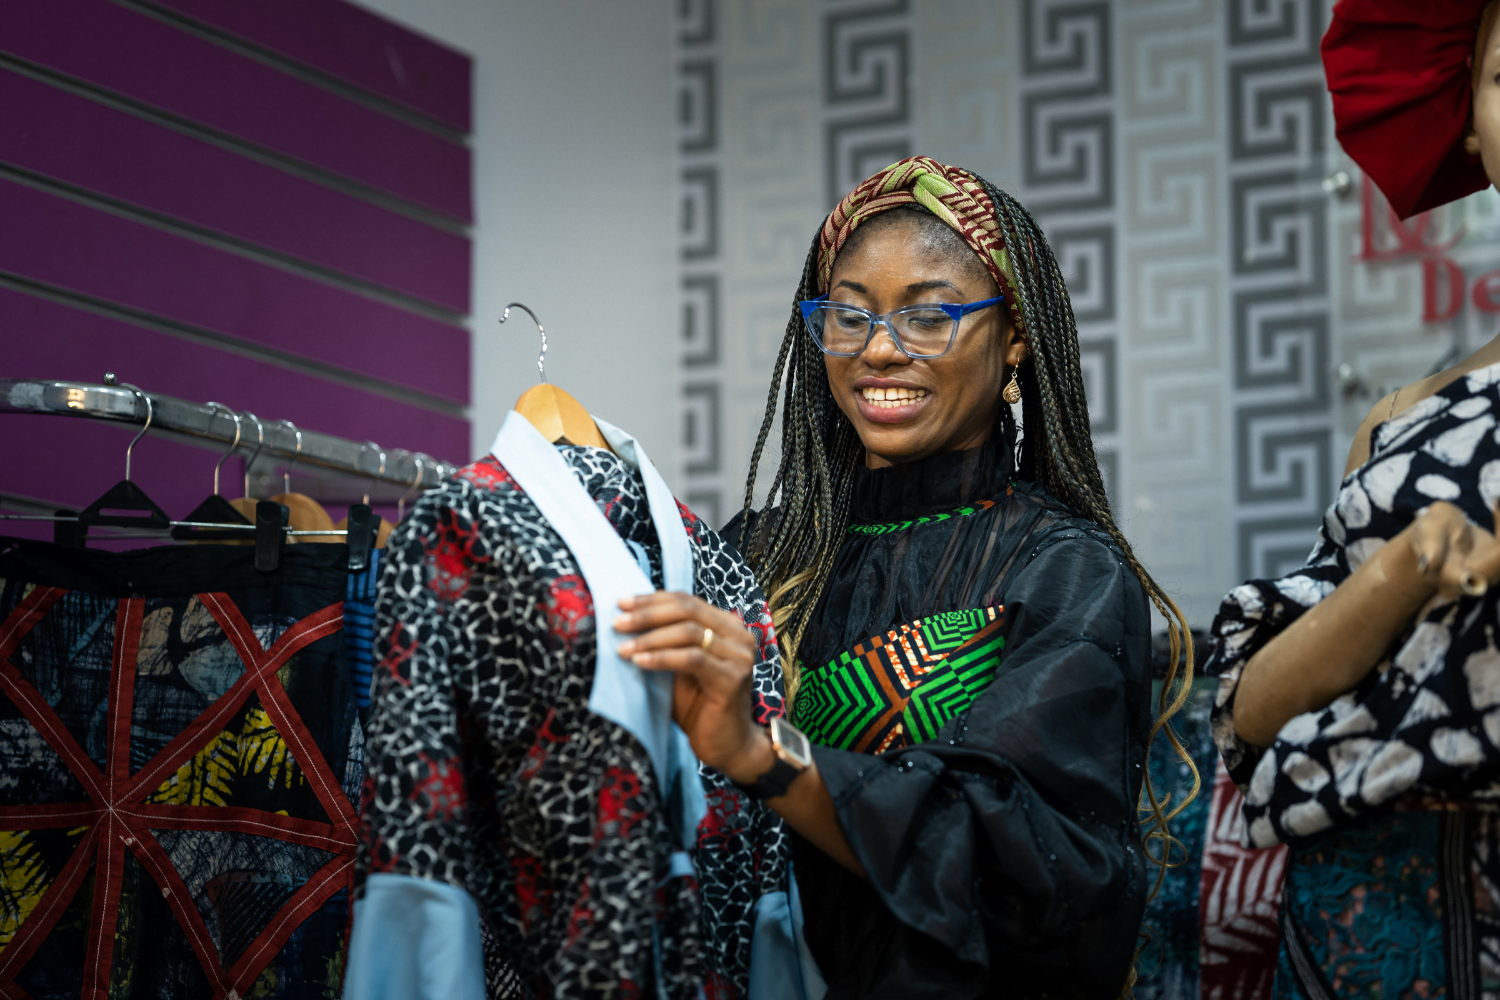 Adaeze Onu hangs garments at her design company, Dexycreation in Nigeria.